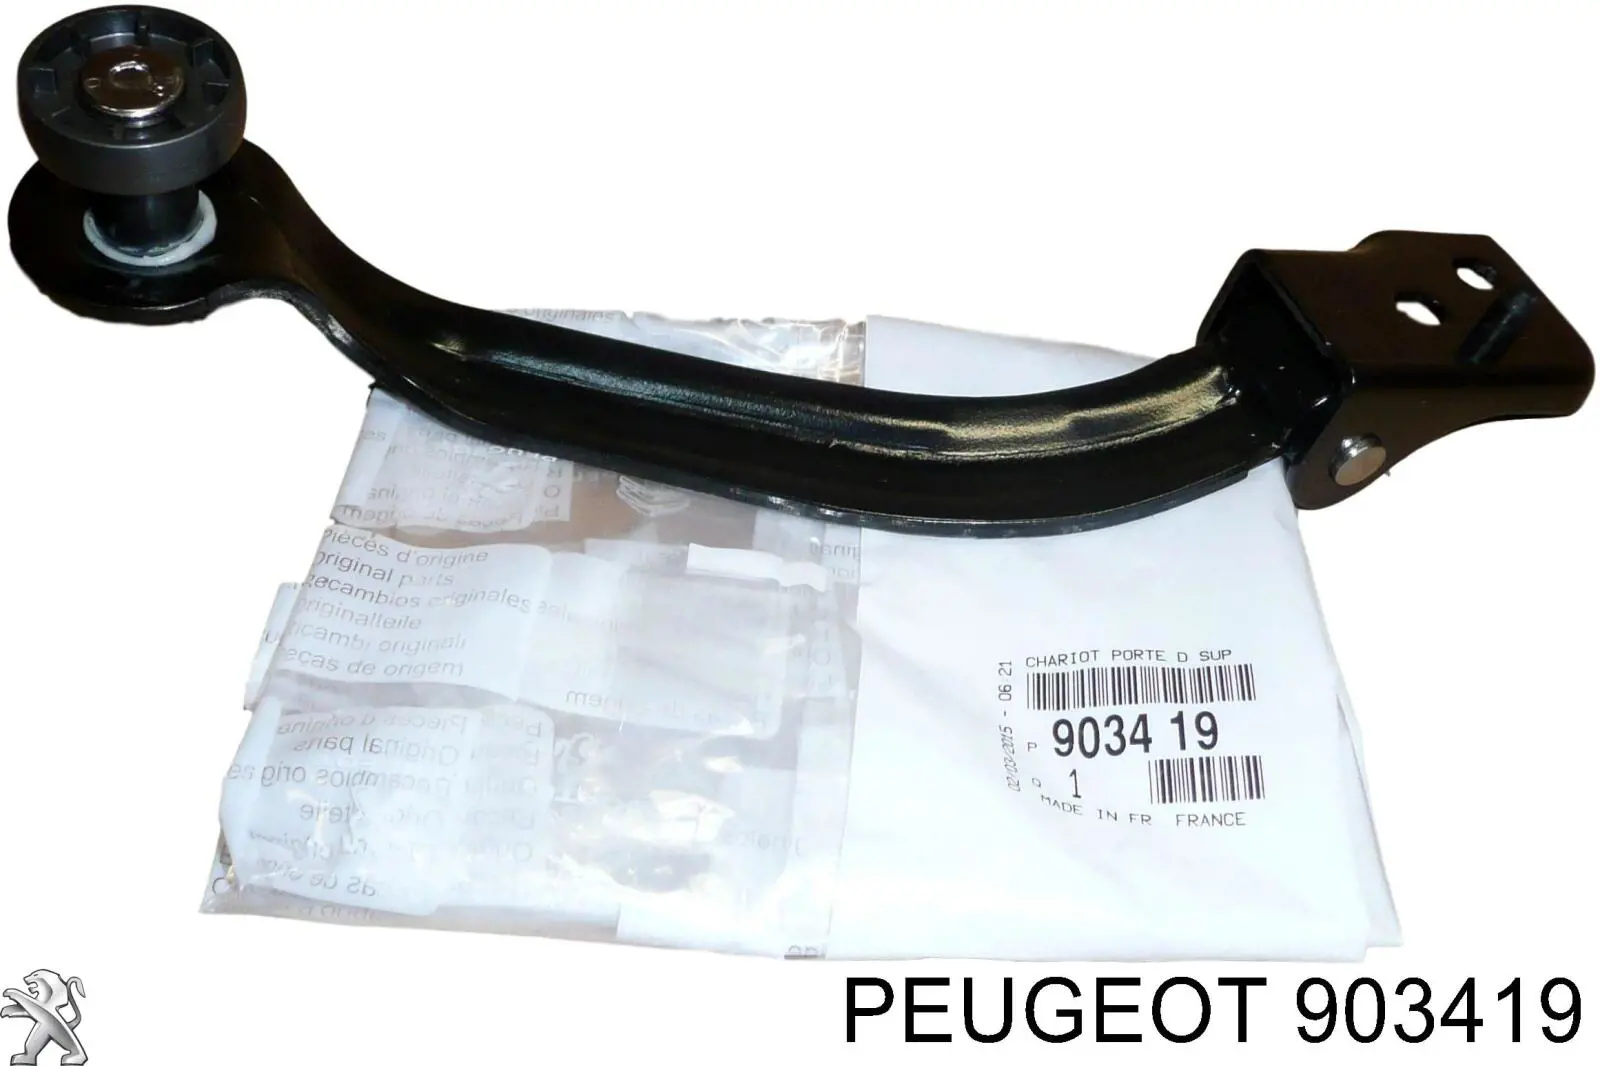 Guía rodillo, puerta corrediza, derecho superior 903419 Peugeot/Citroen